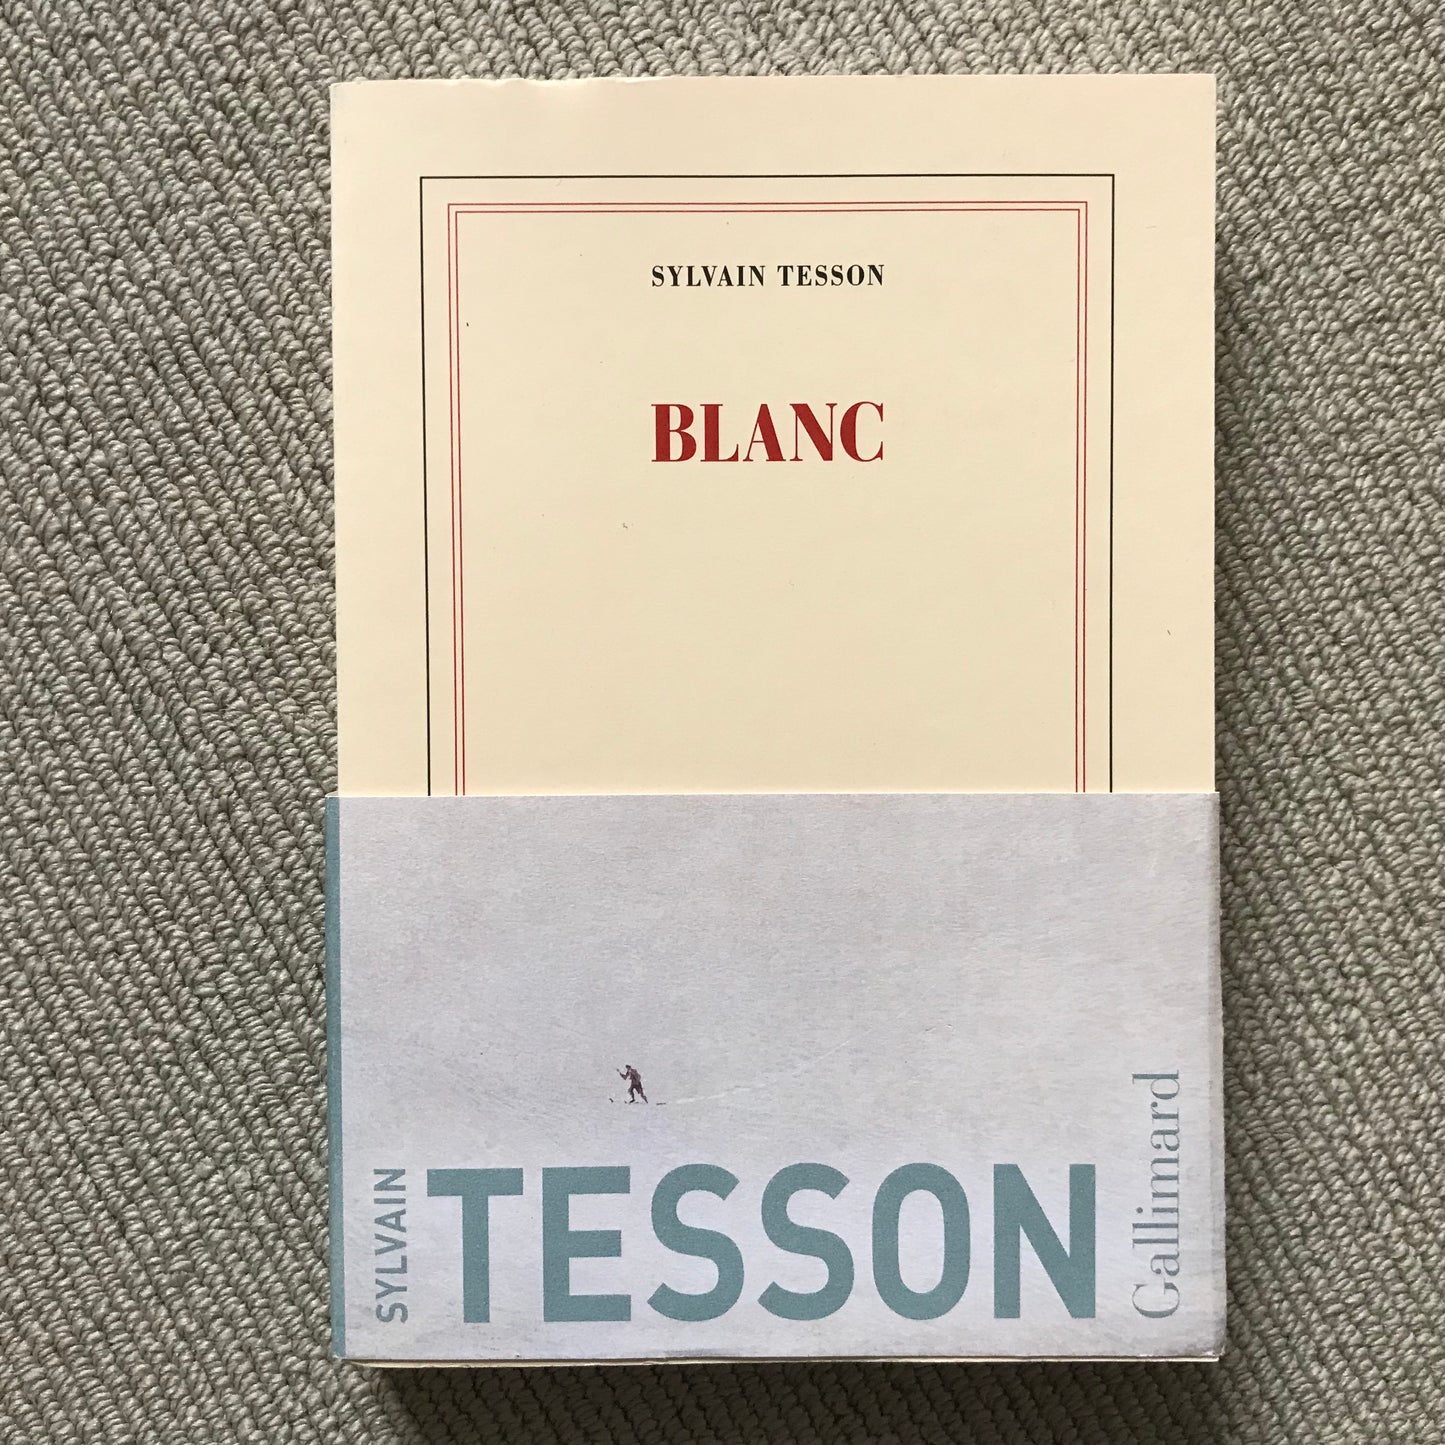 Tesson, Sylvain - Blanc